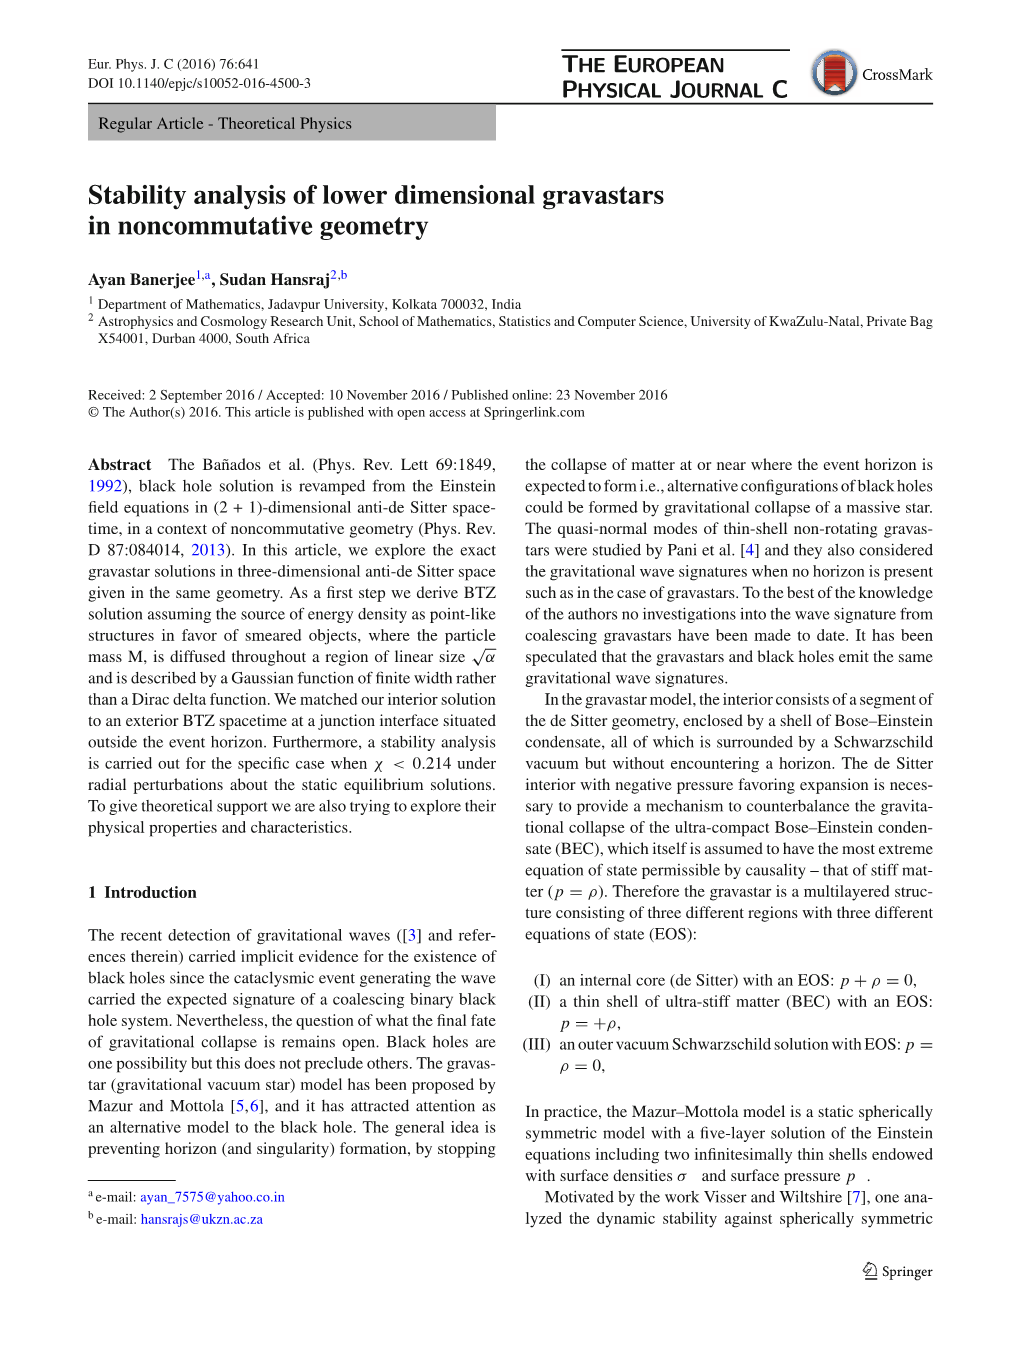 Stability Analysis of Lower Dimensional Gravastars in Noncommutative Geometry